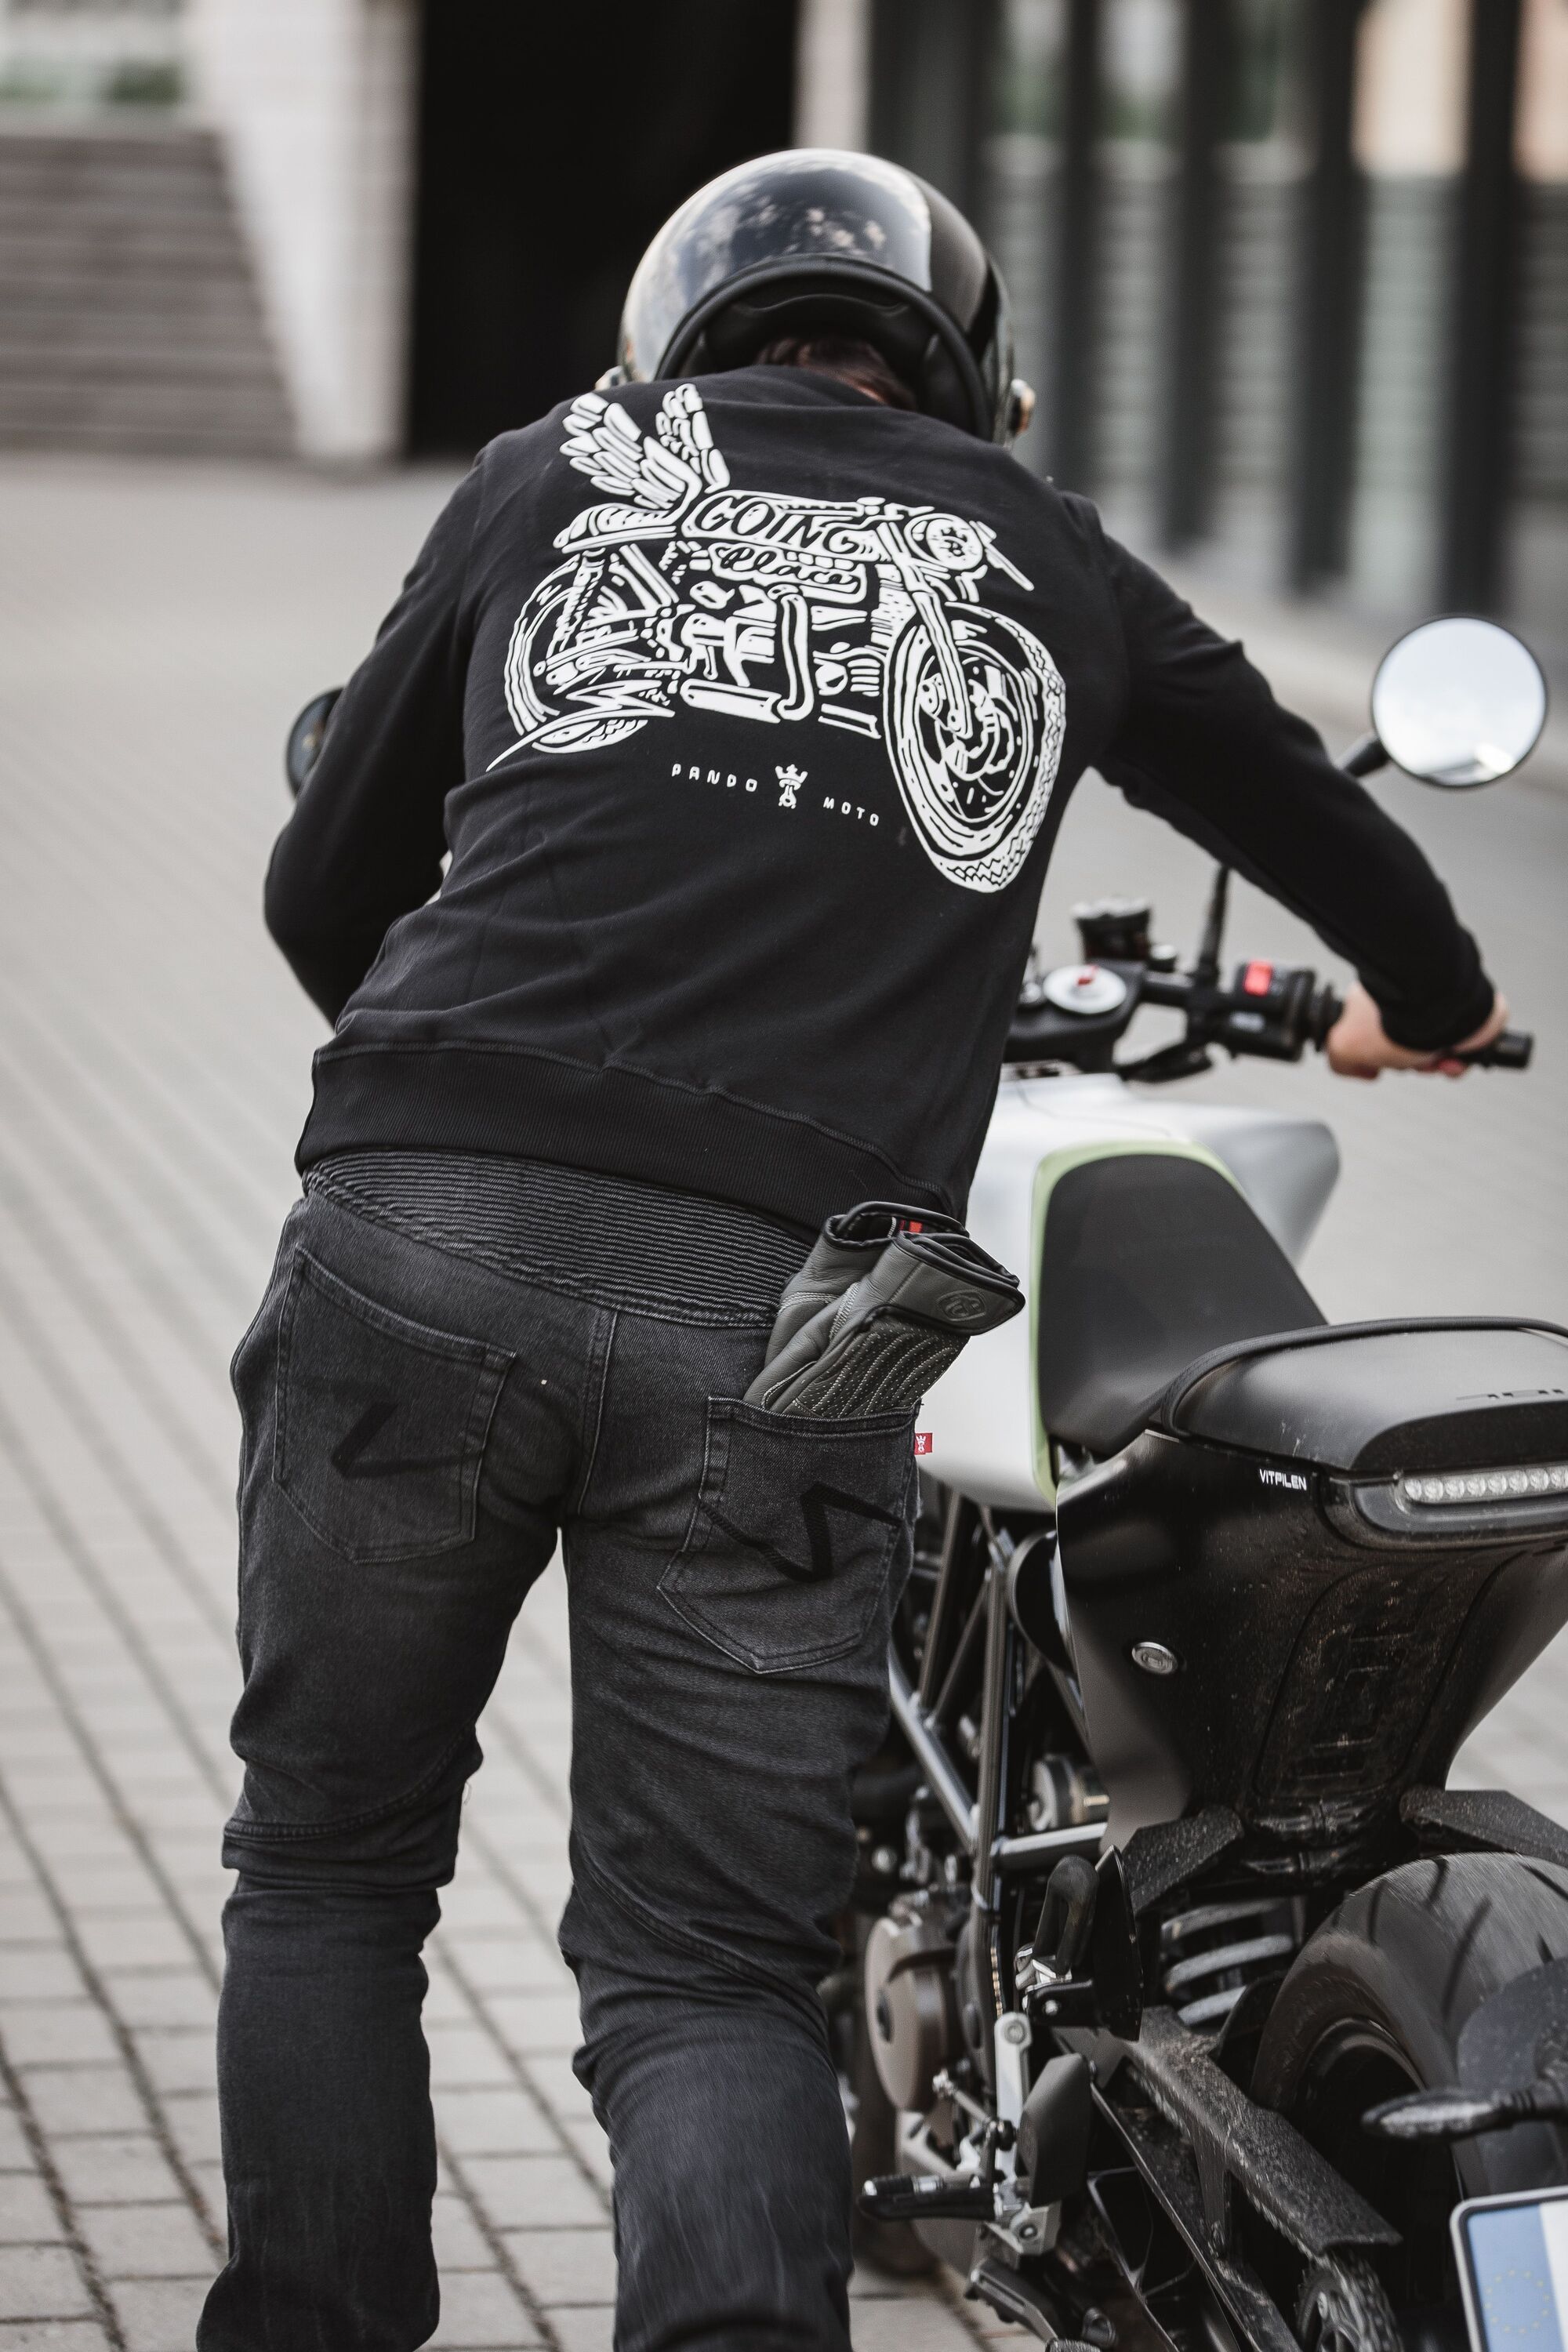 KARL DEVIL 9 - Motorcycle Jeans for Men Slim-Fit Cordura®